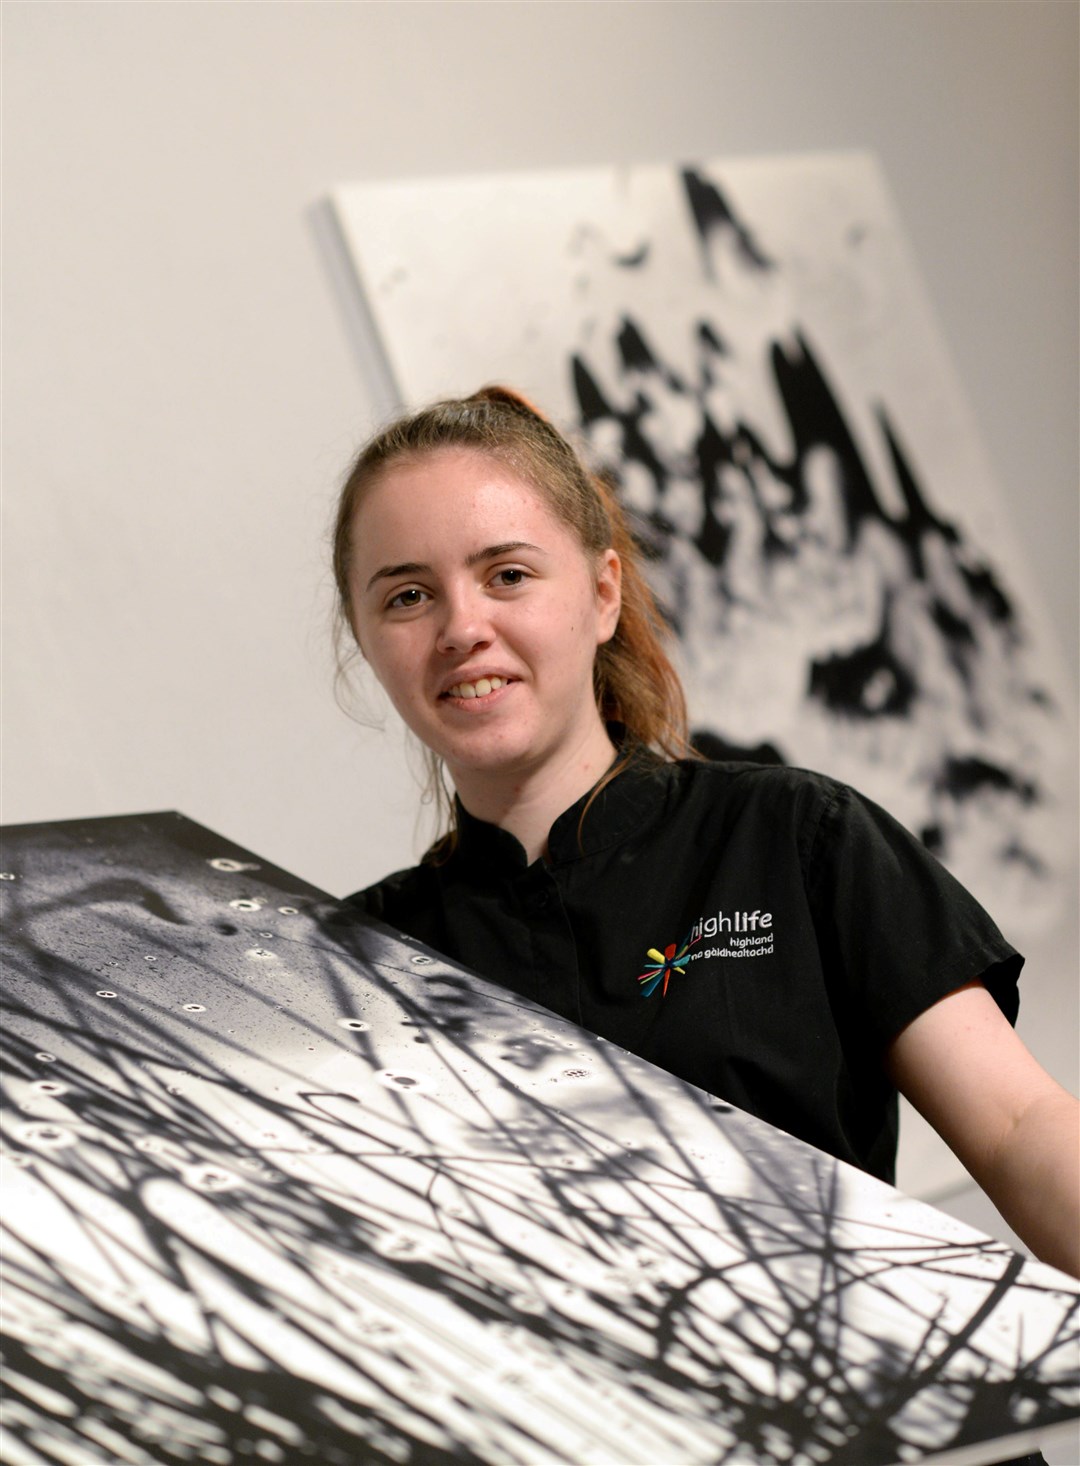 Lauren Mckittrick, arts leader for High Life Highland.